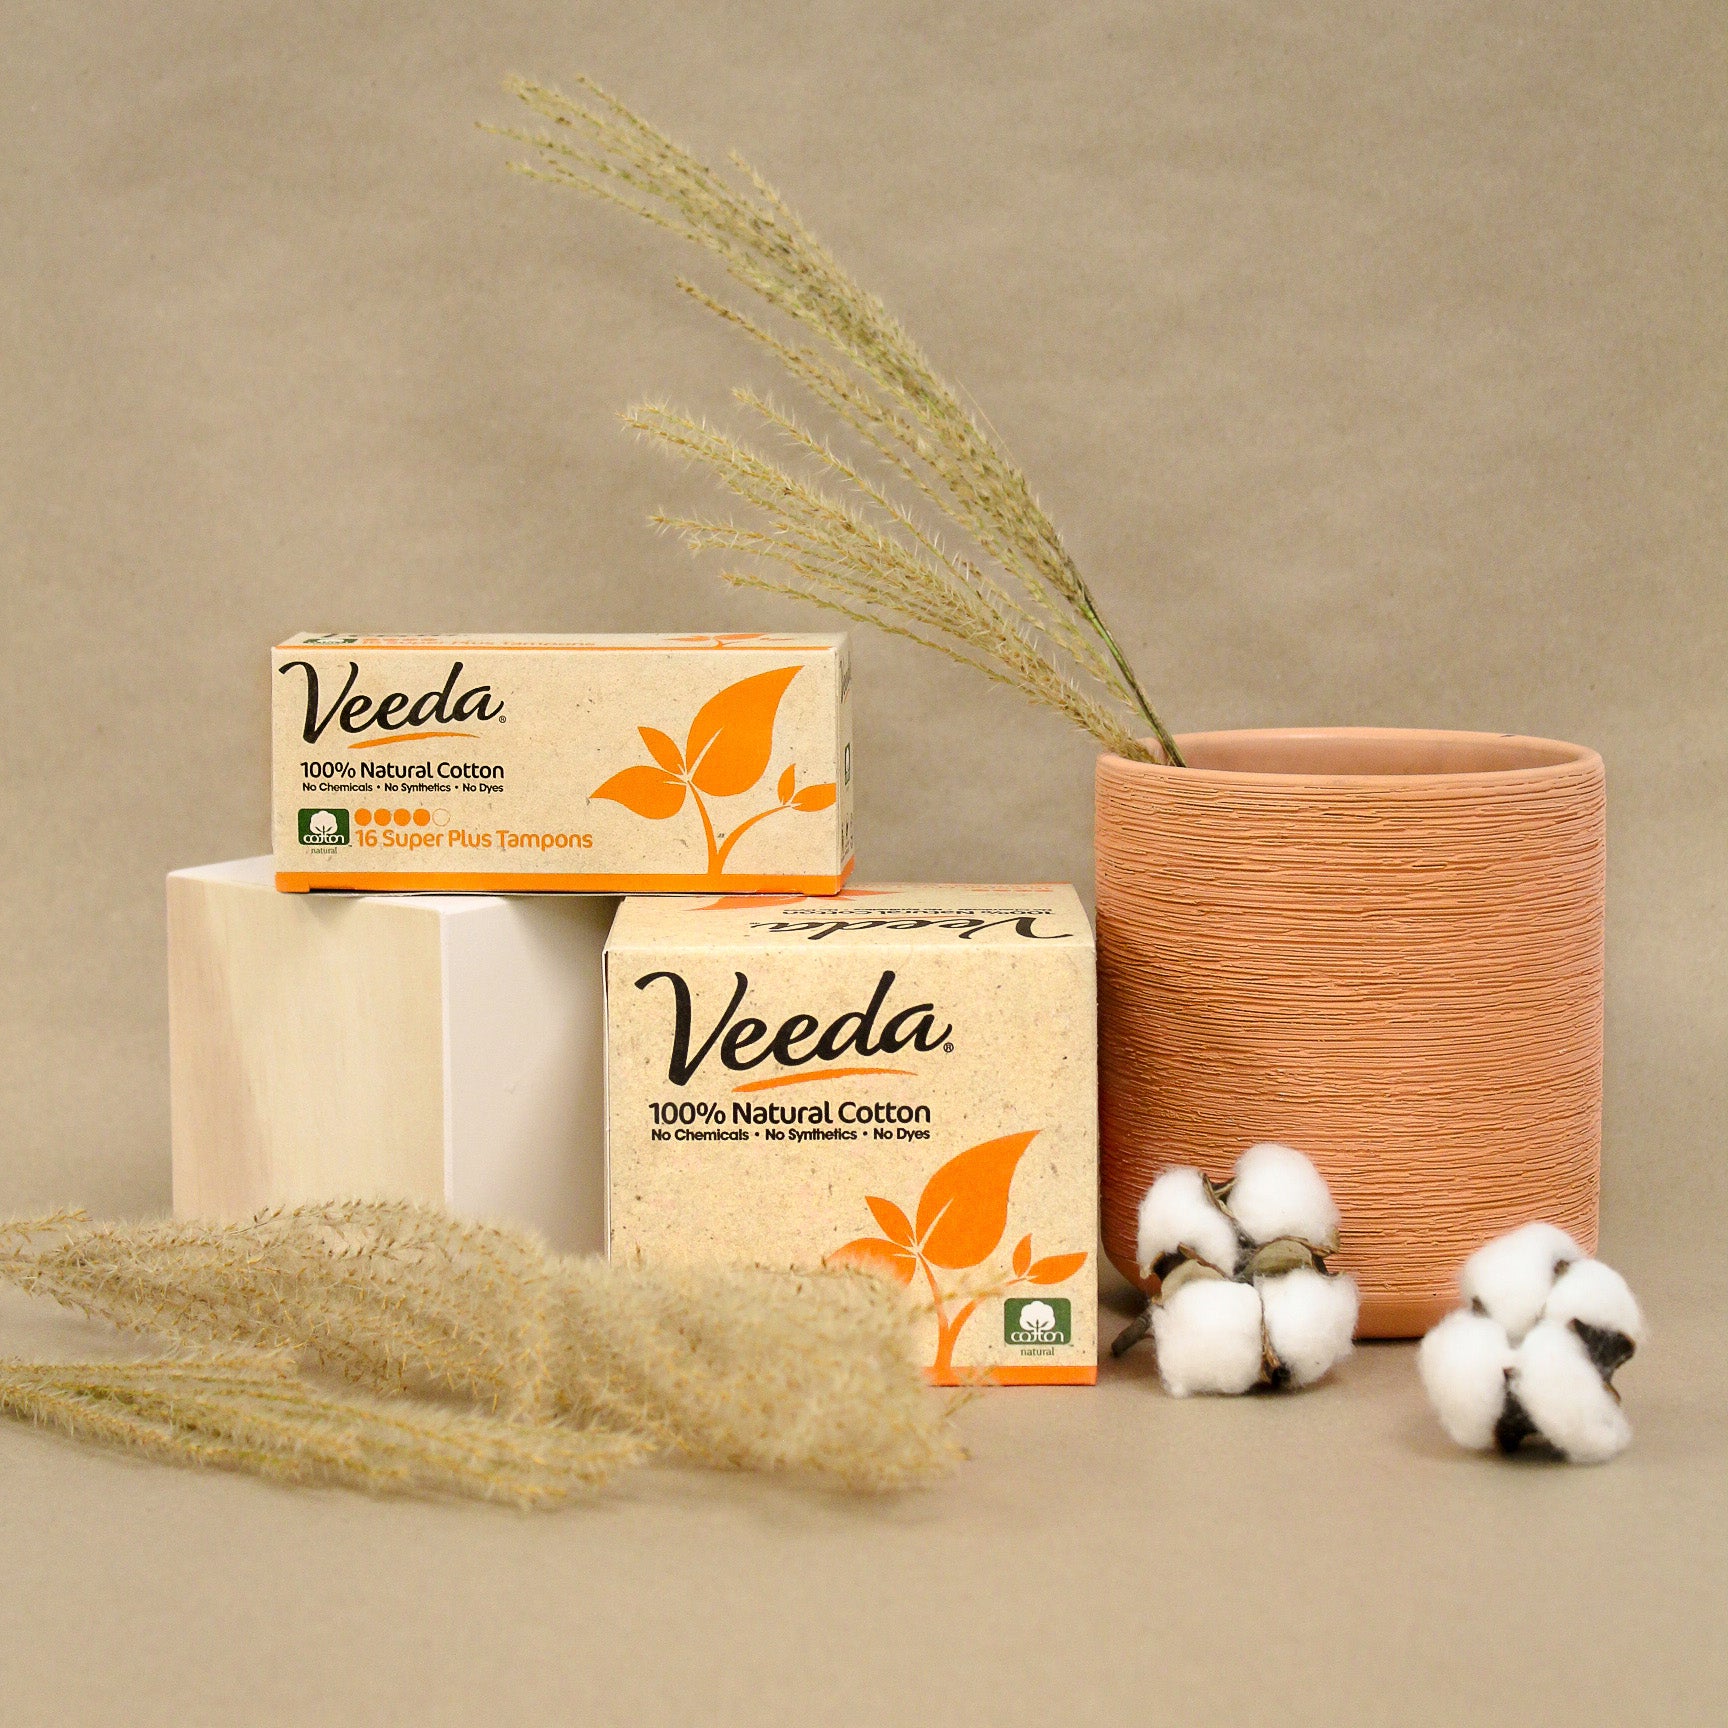 Veeda Natural Fem-Care Products